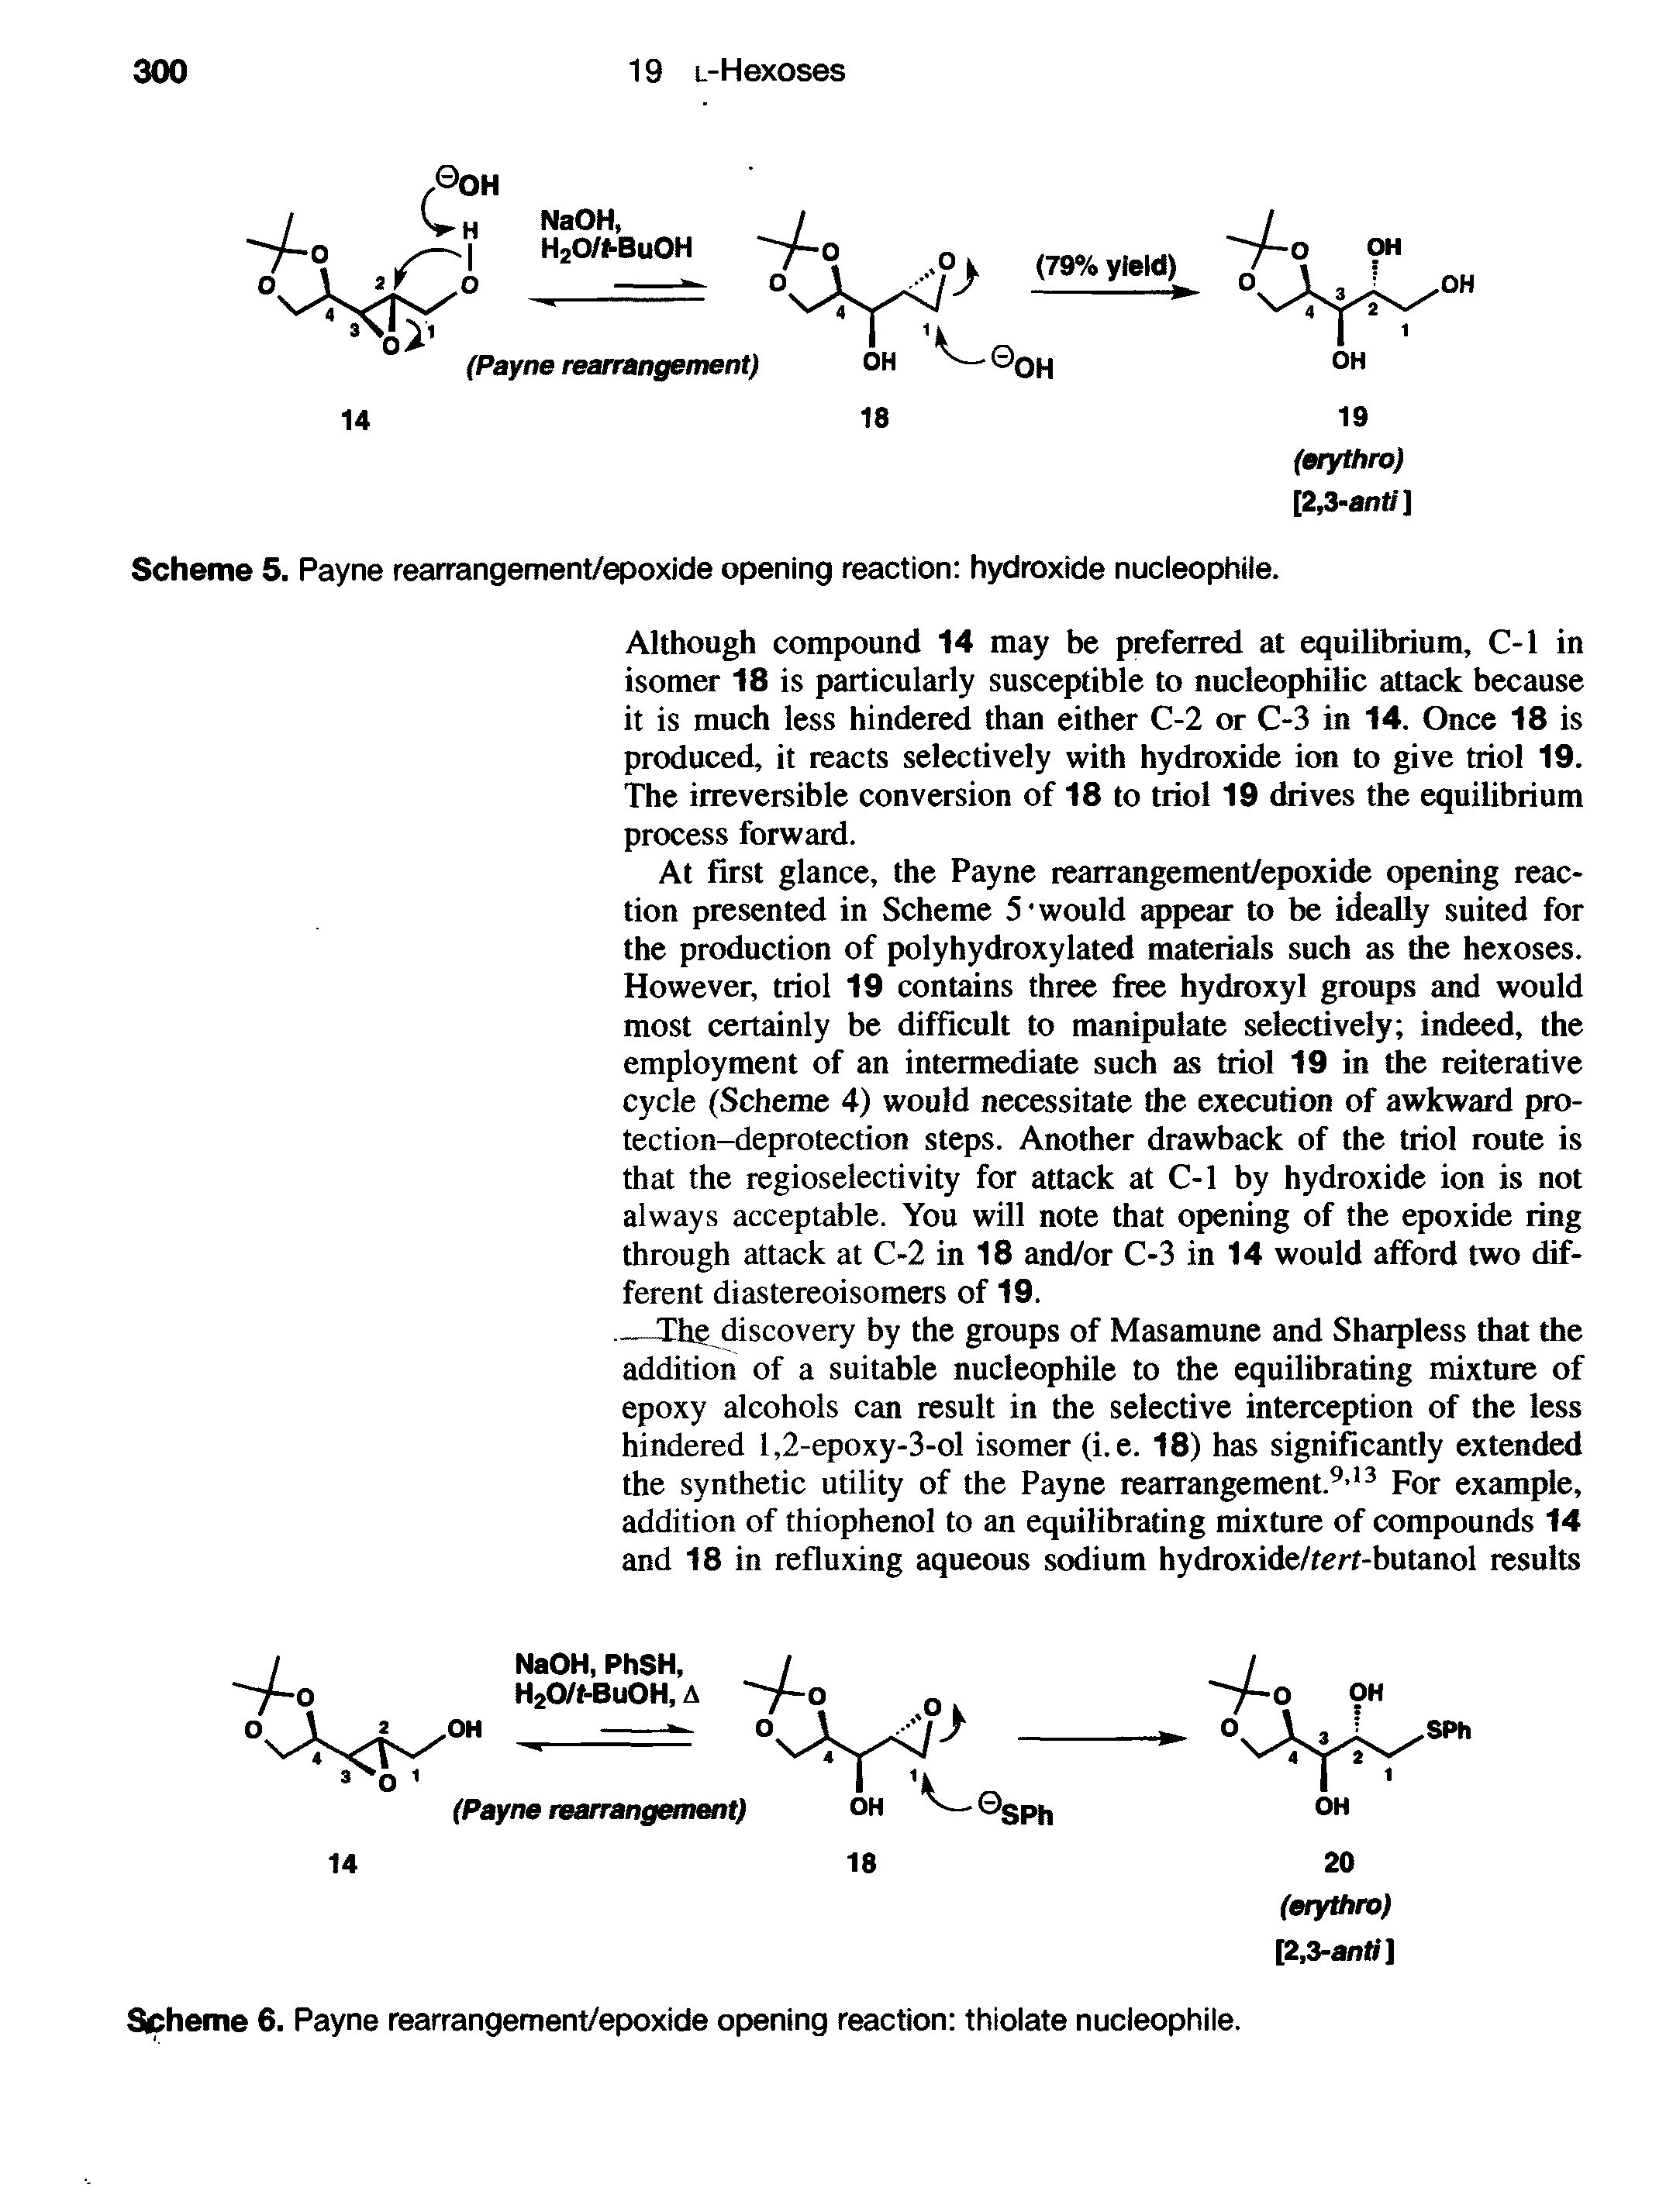 Scheme 6. Payne rearrangement/epoxide opening reaction thiolate nucleophile.